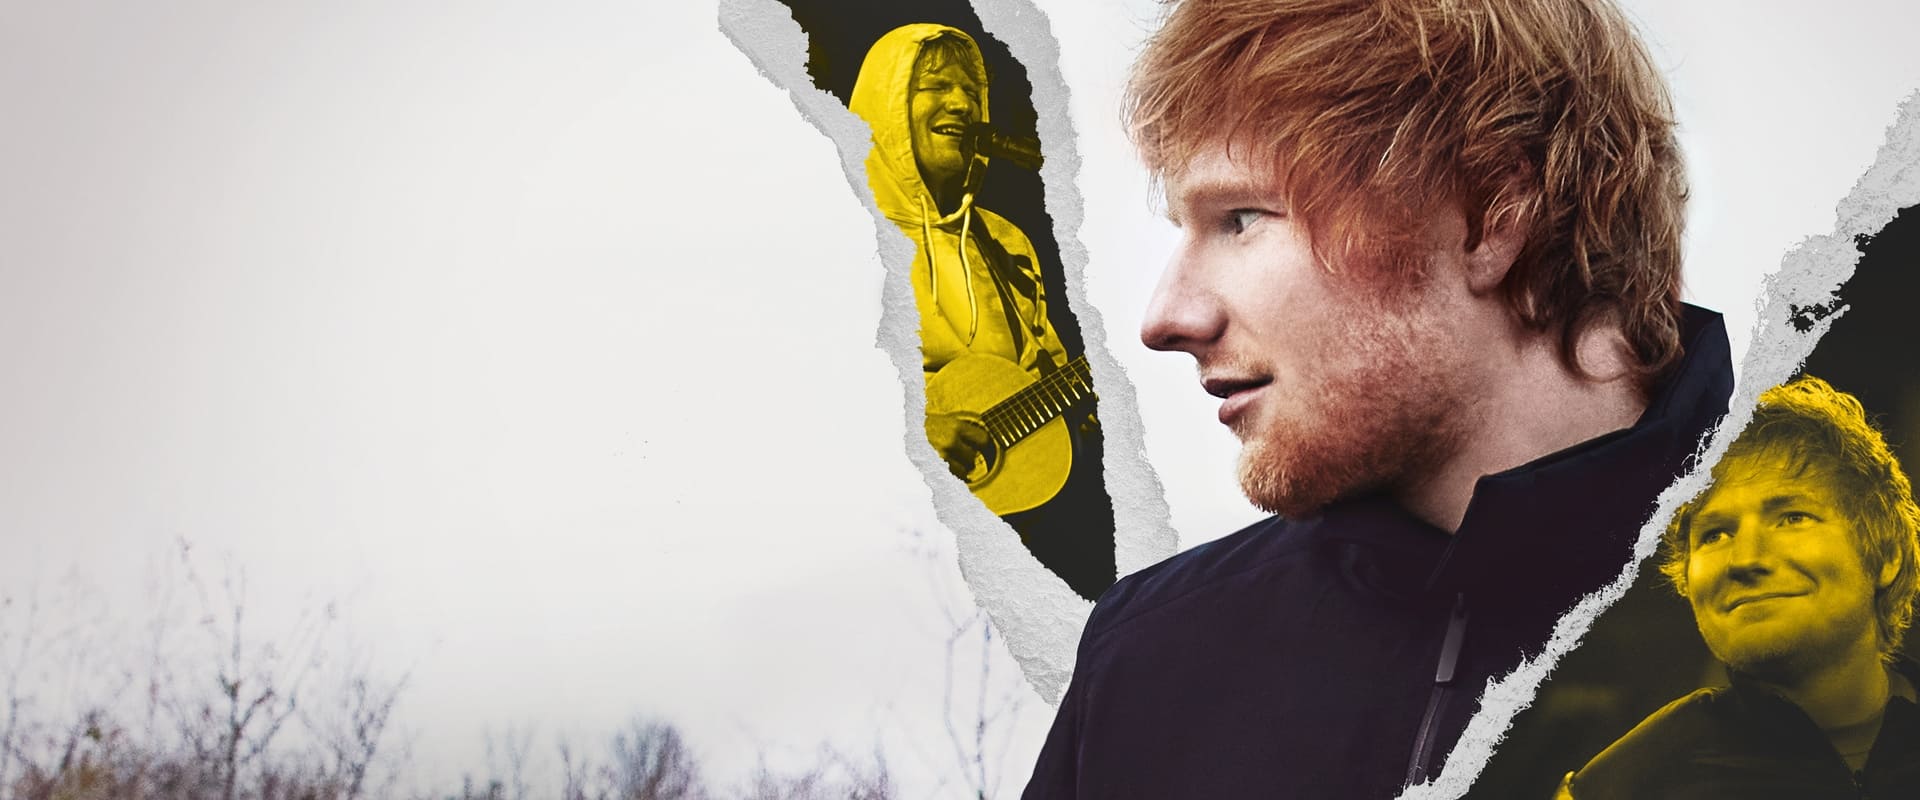 Ed Sheeran: tudo somado